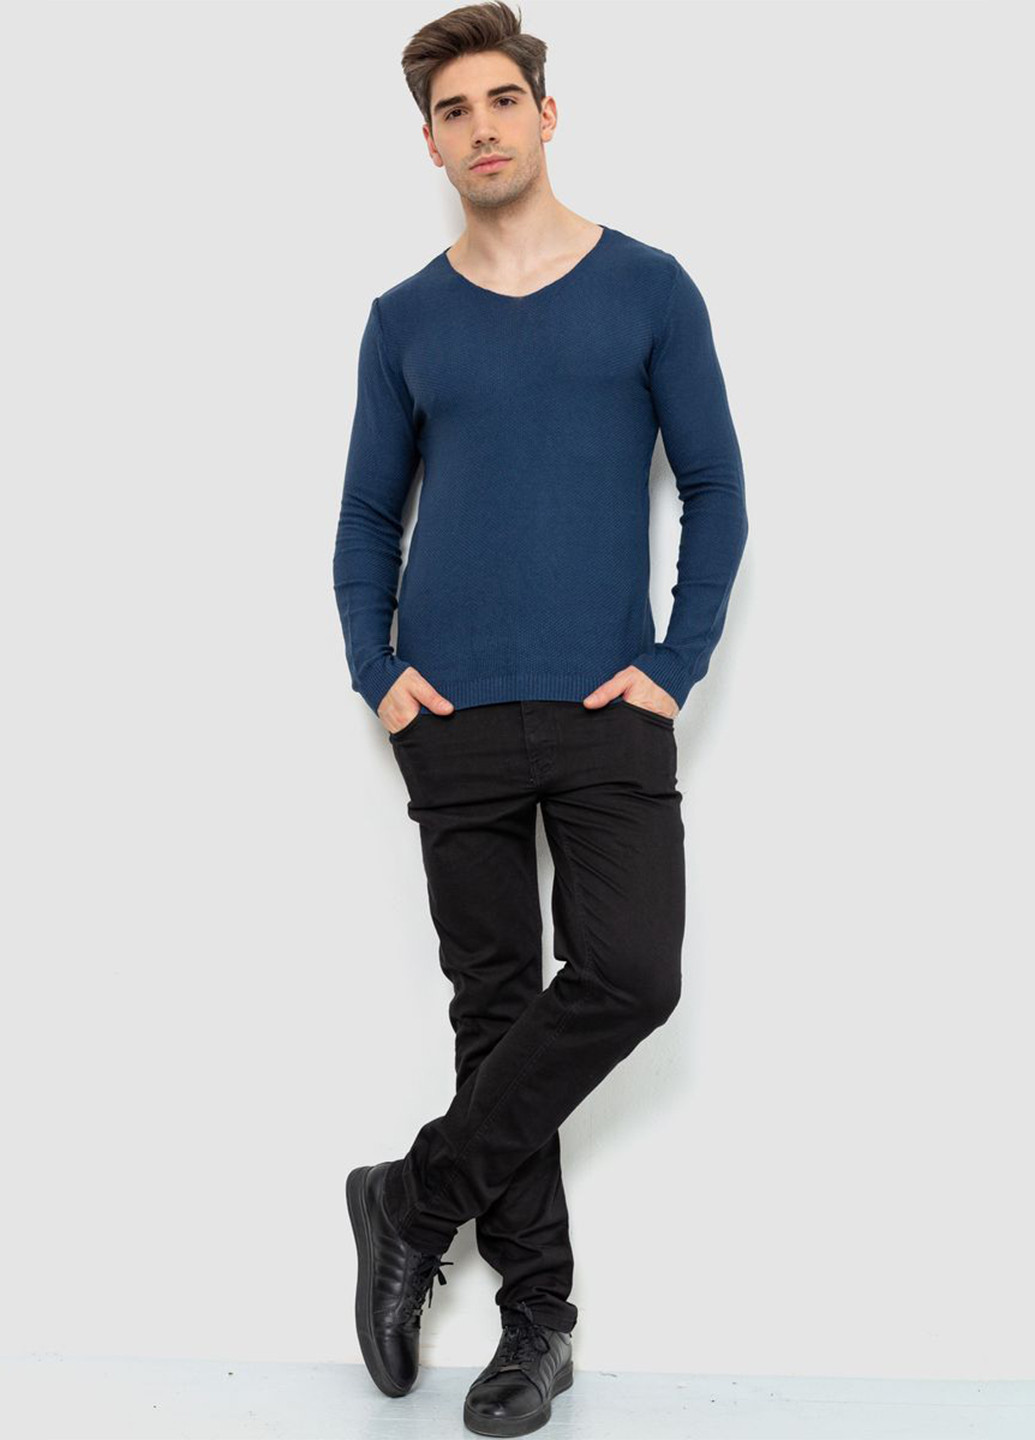 Синий демисезонный пуловер пуловер Ager